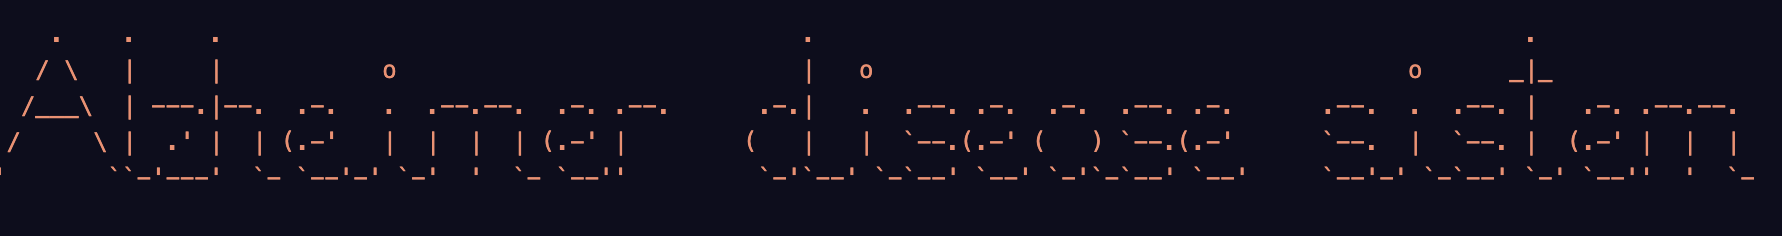 image in ASCII text